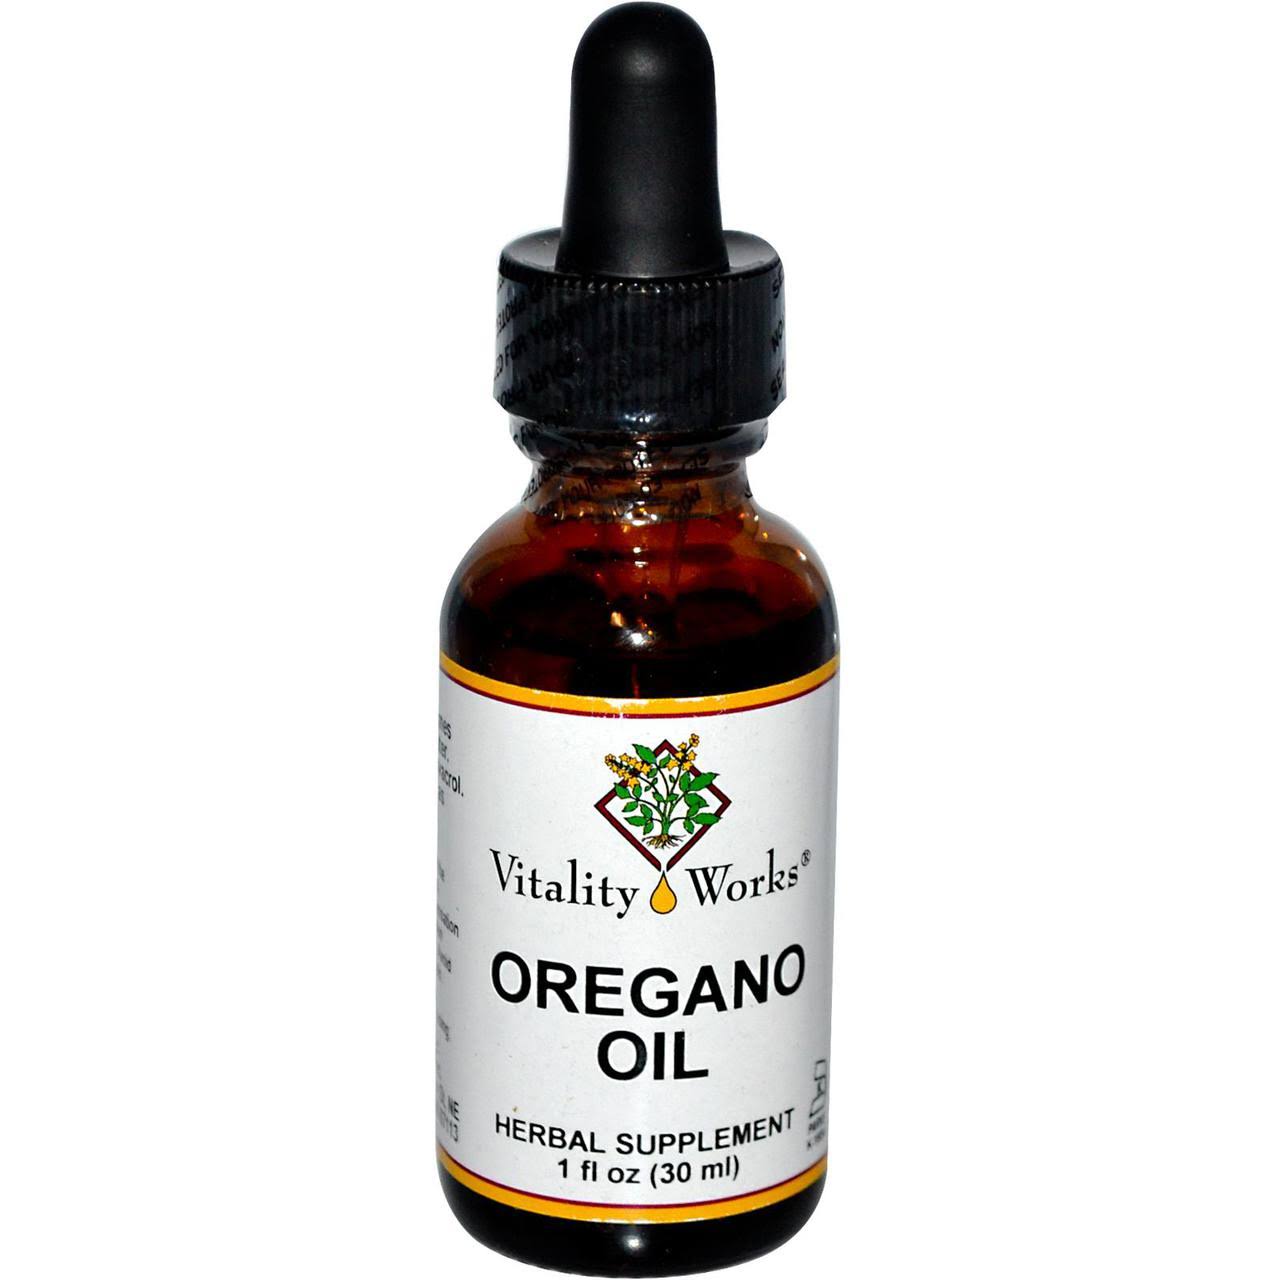 Vitality Works Oregano Oil - 30ml